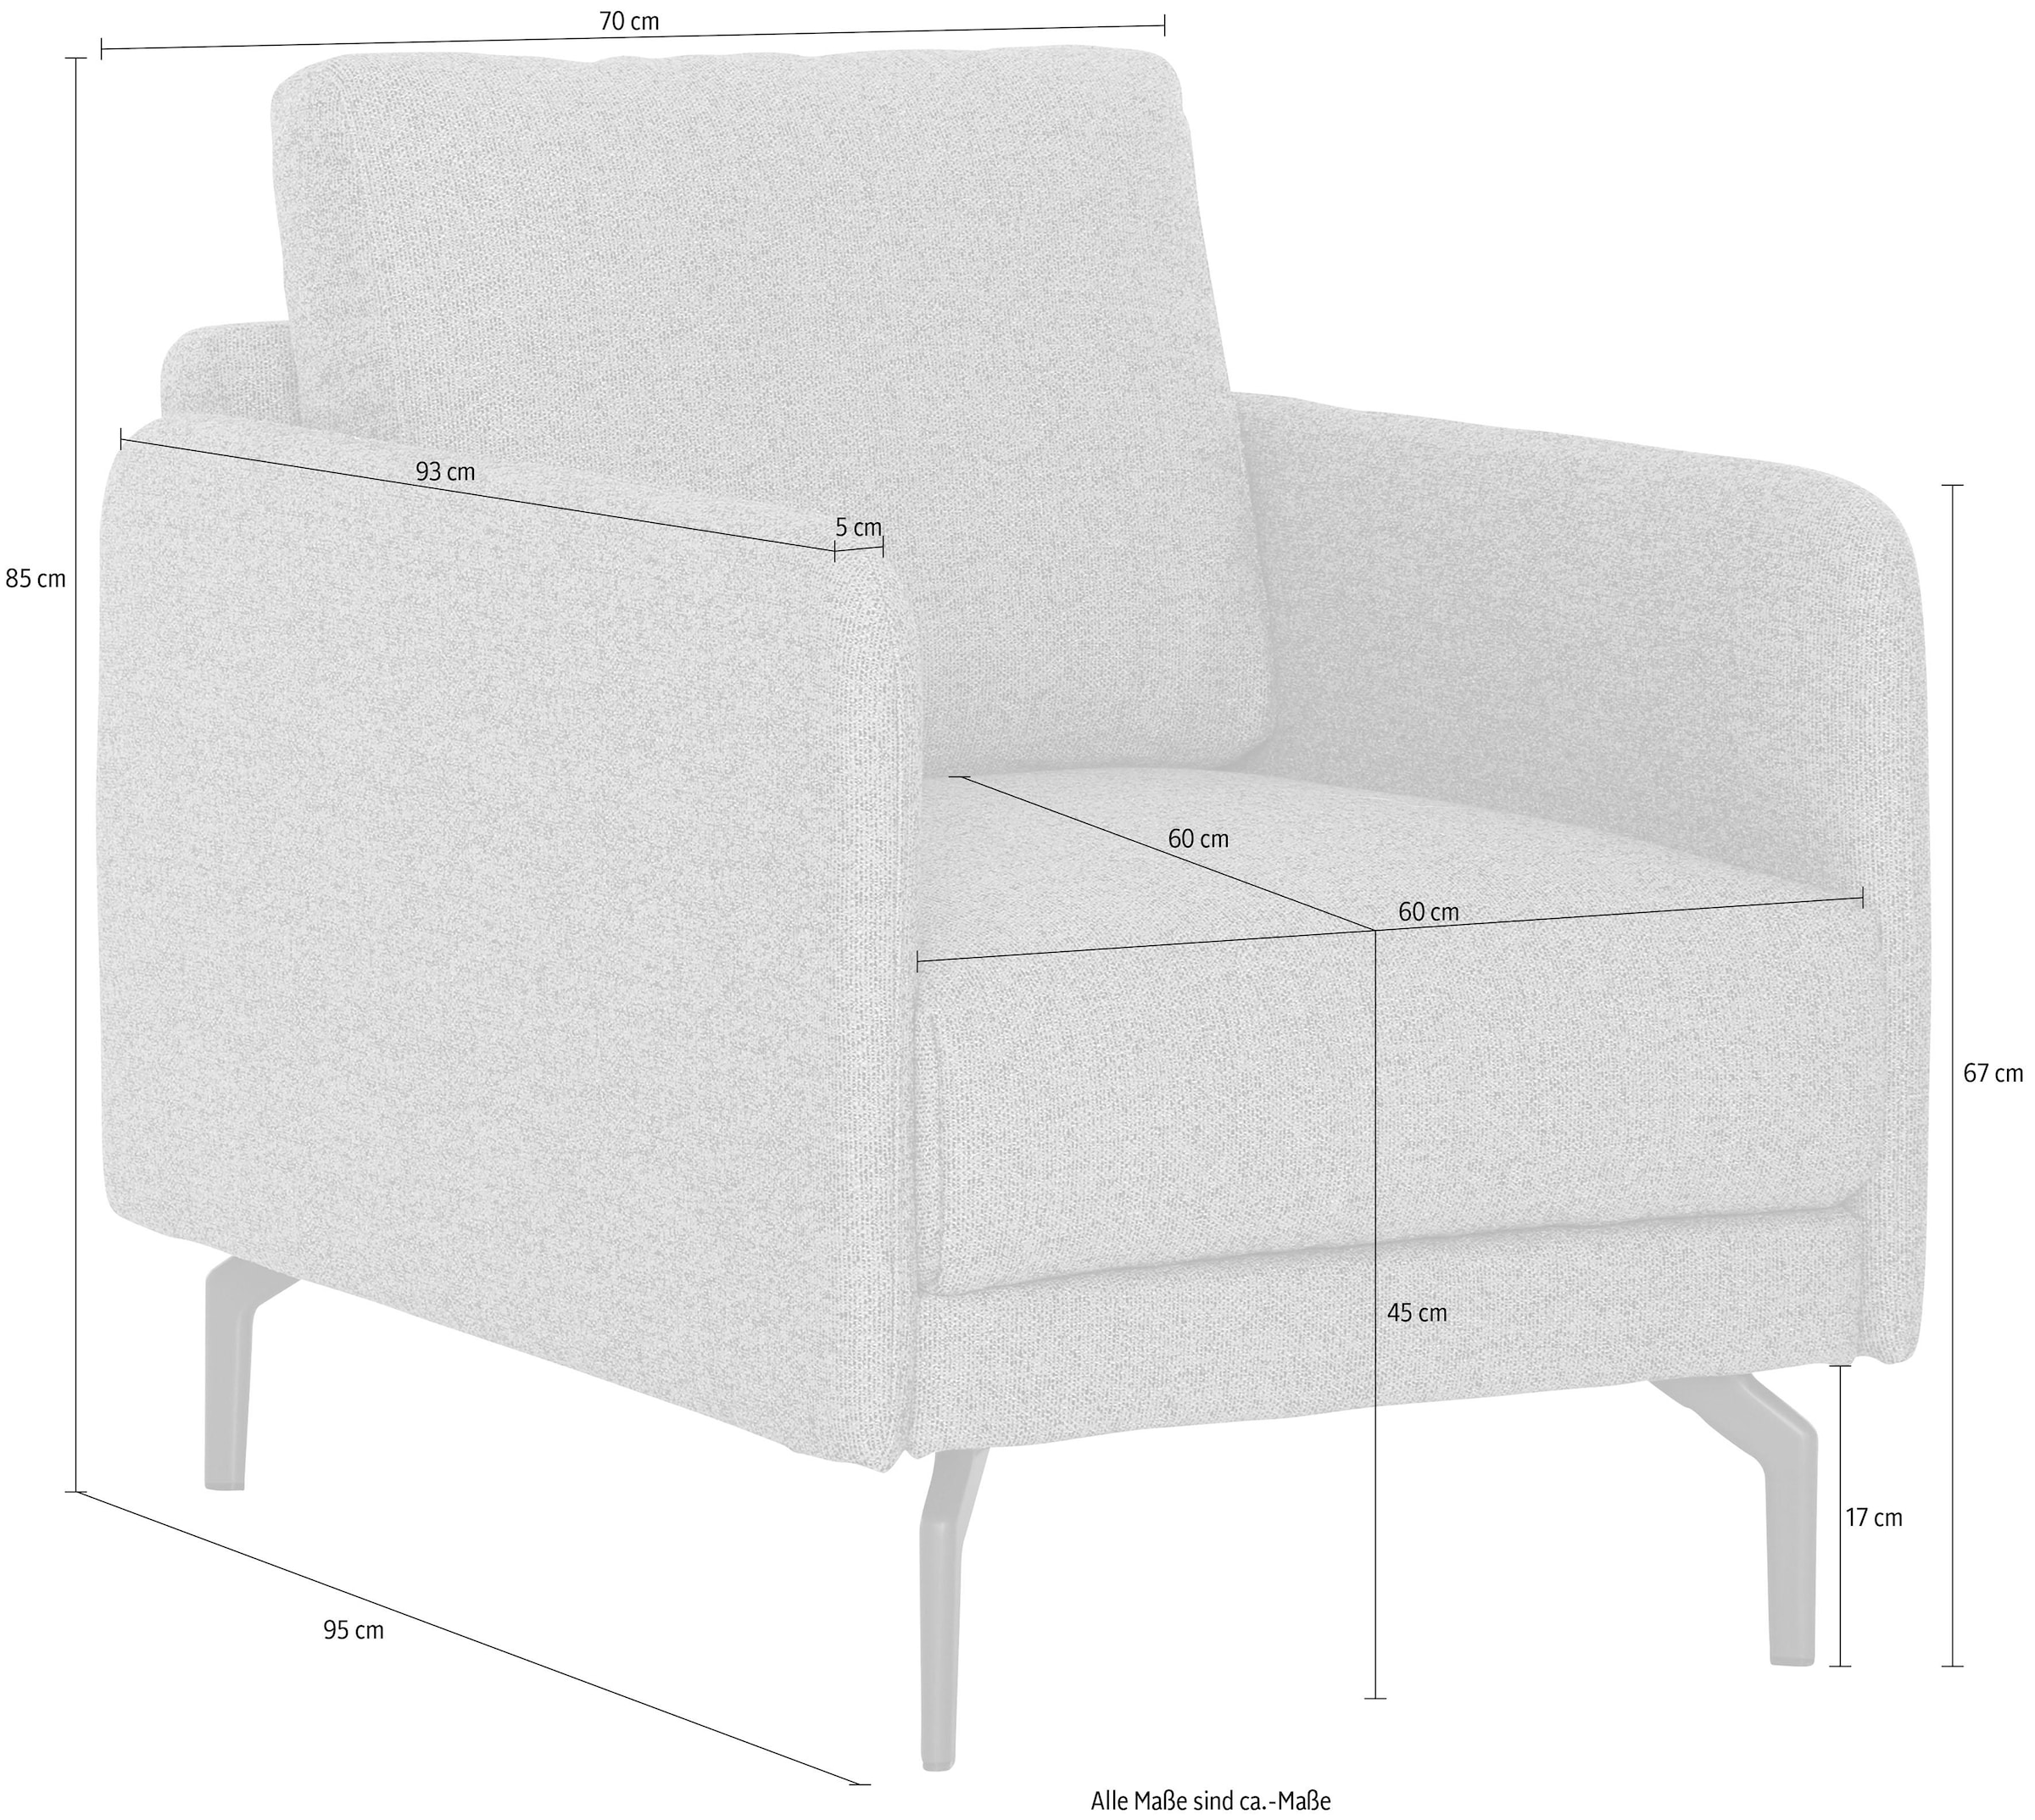 Sessel Shop Online »hs.450«, cm, sehr schmal, hülsta Armlehne Alugussfuß 70 Breite OTTO Umbragrau sofa